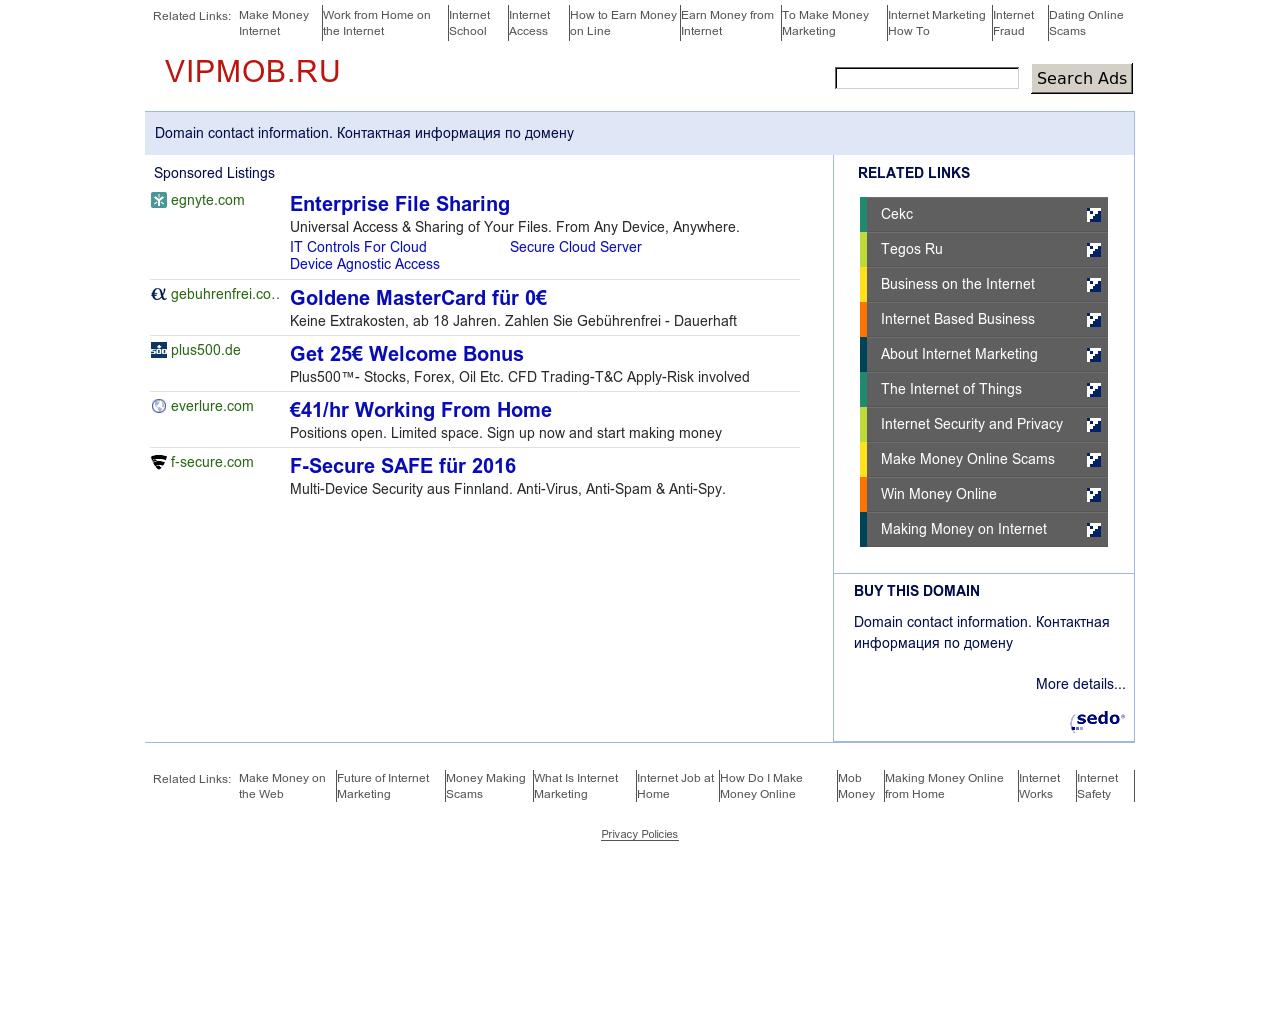 Изображение сайта vipmob.ru в разрешении 1280x1024